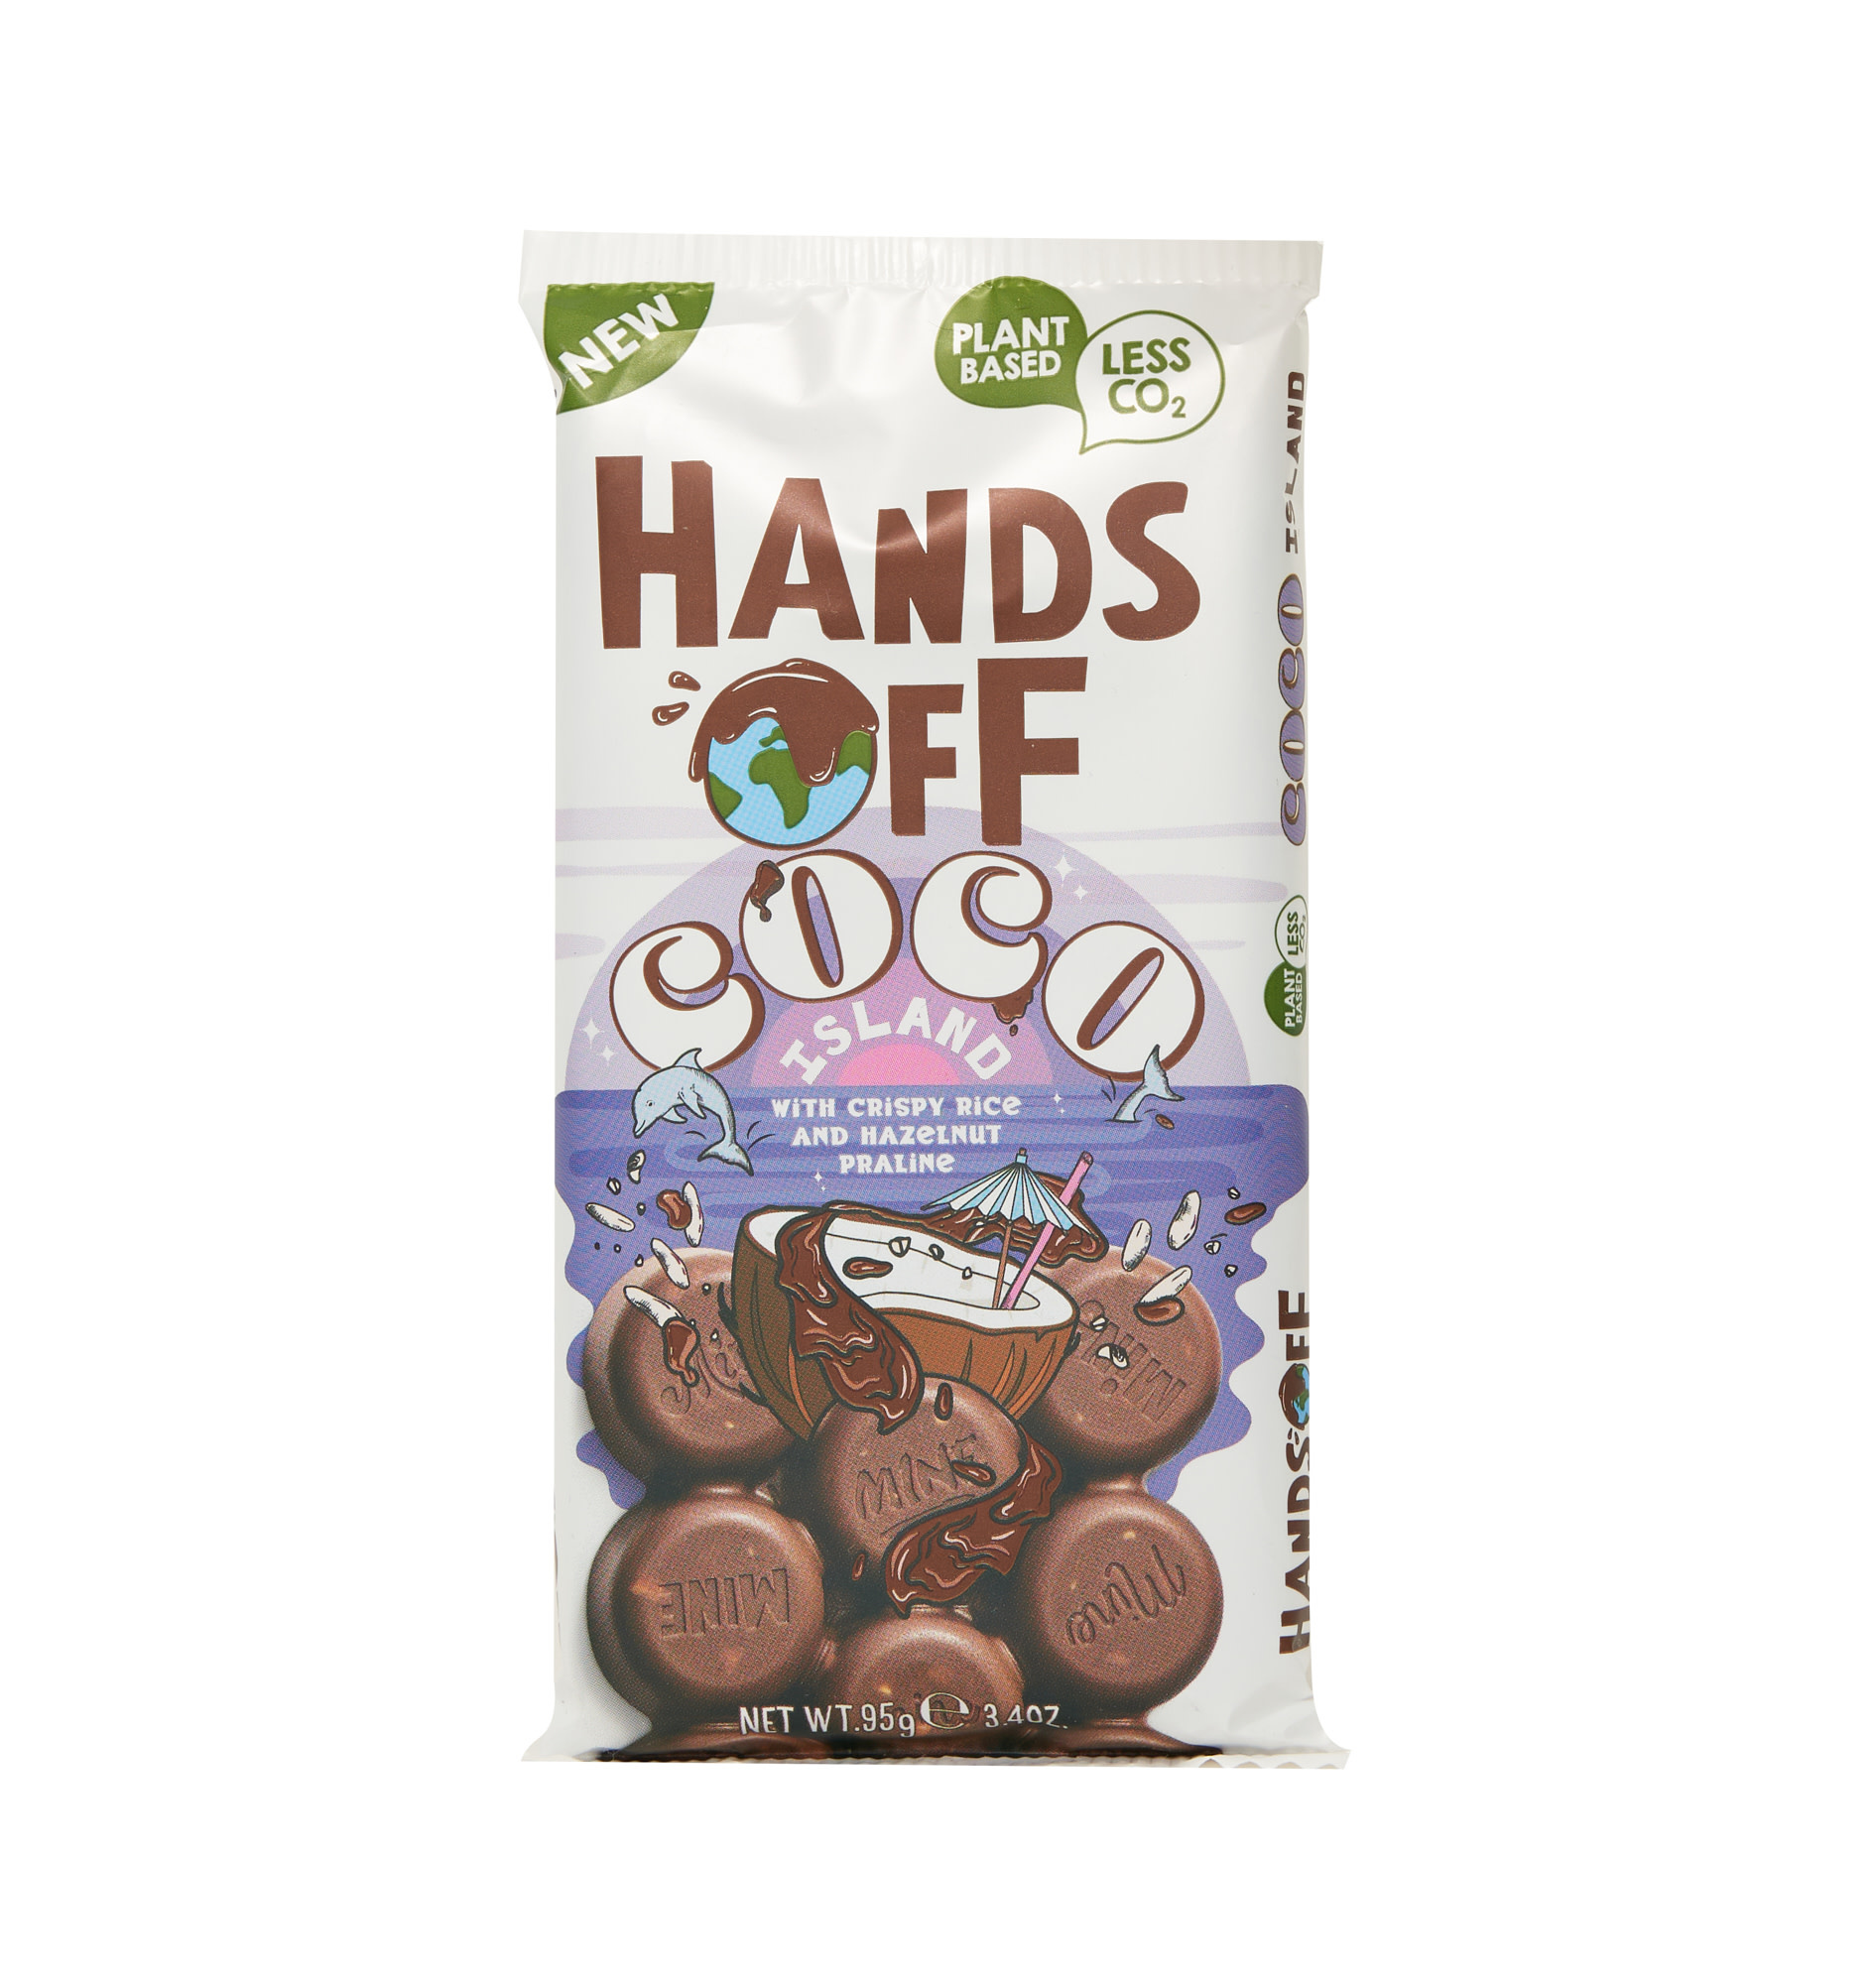 HANDS OFF Hands Off Vegan Coco Island - Crispy Rice & Hazelnut Praline